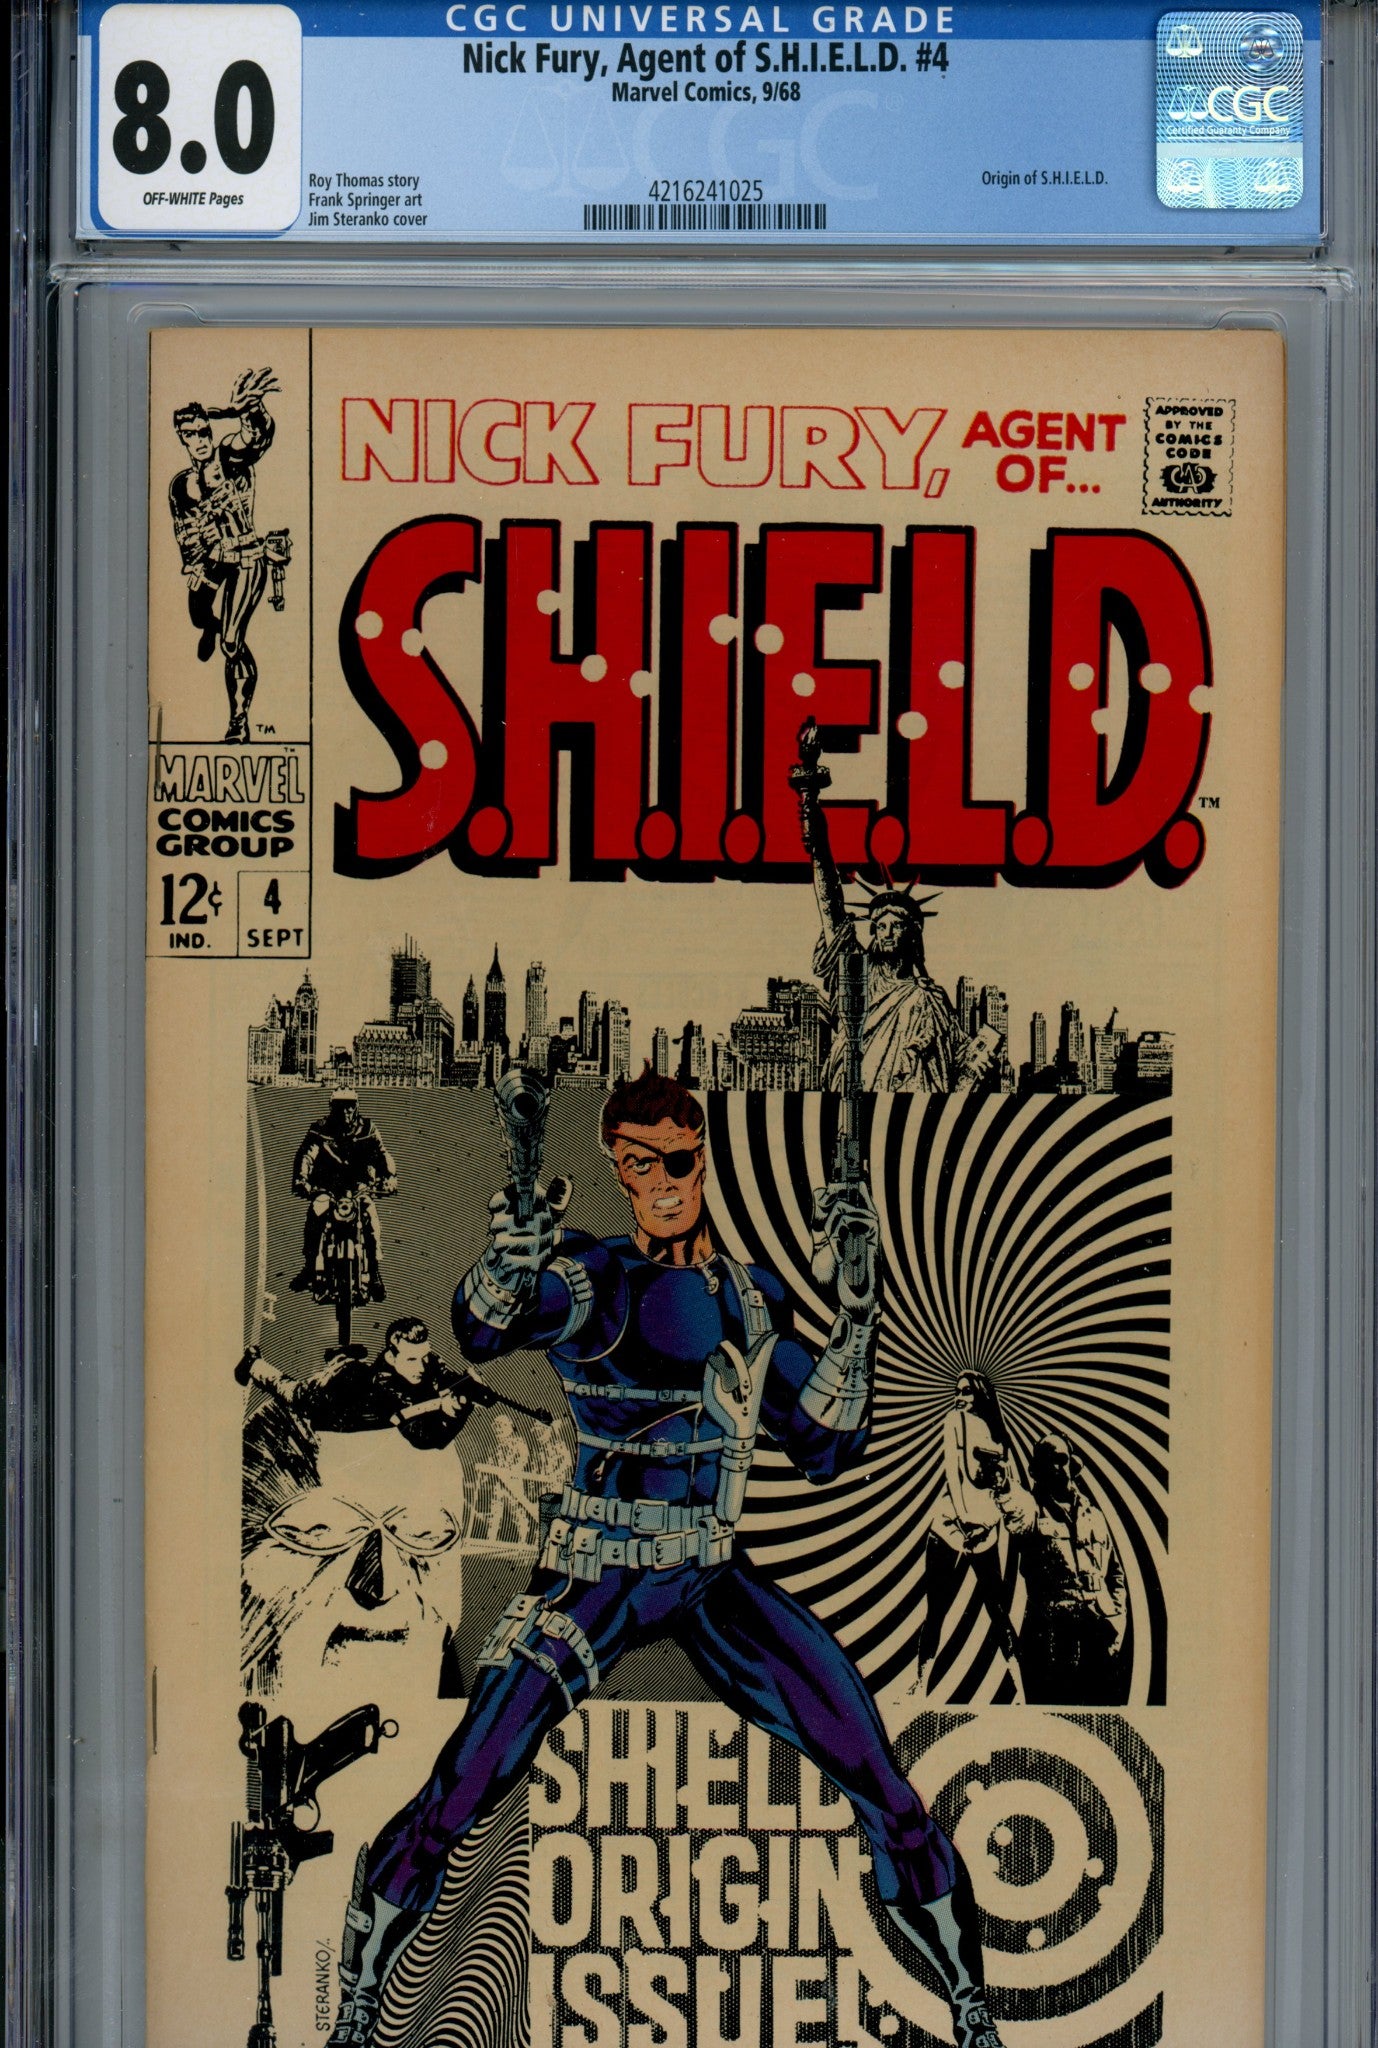 Nick Fury, Agent of SHIELD Vol 1 4 CGC 8.0 (VF) (1968) 